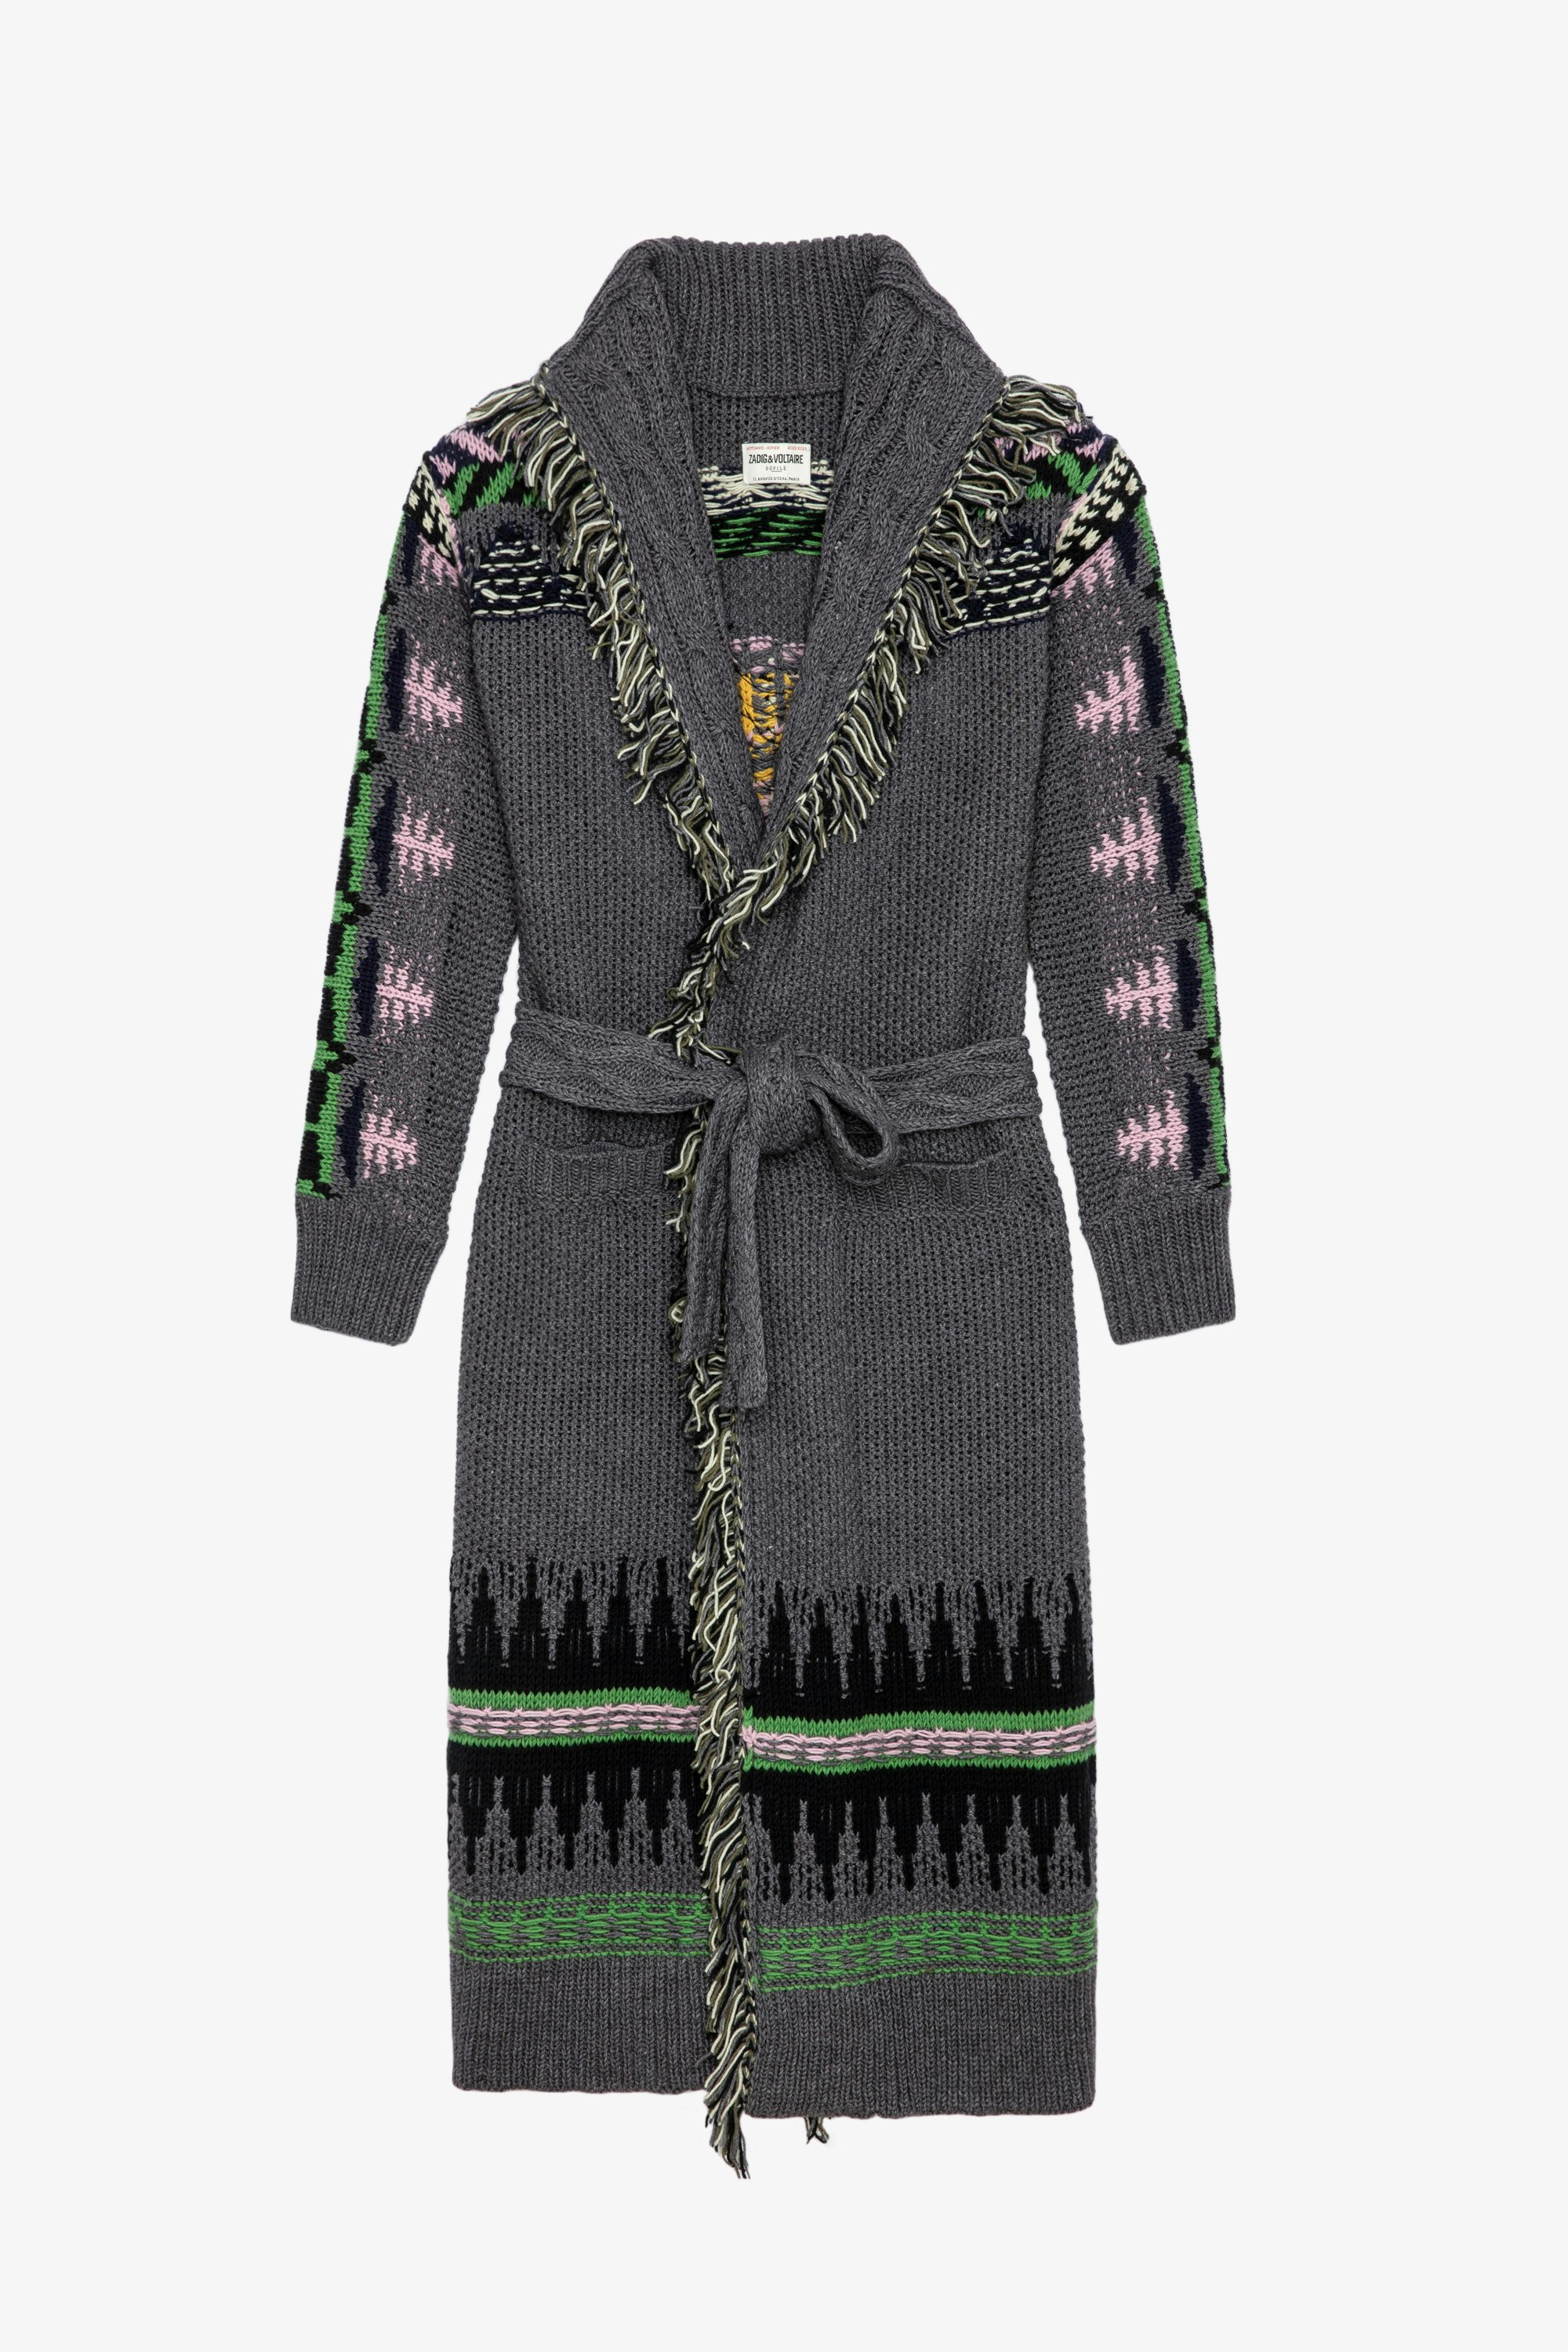 Ellina Wool コート Women’s long grey wool coat with fringing